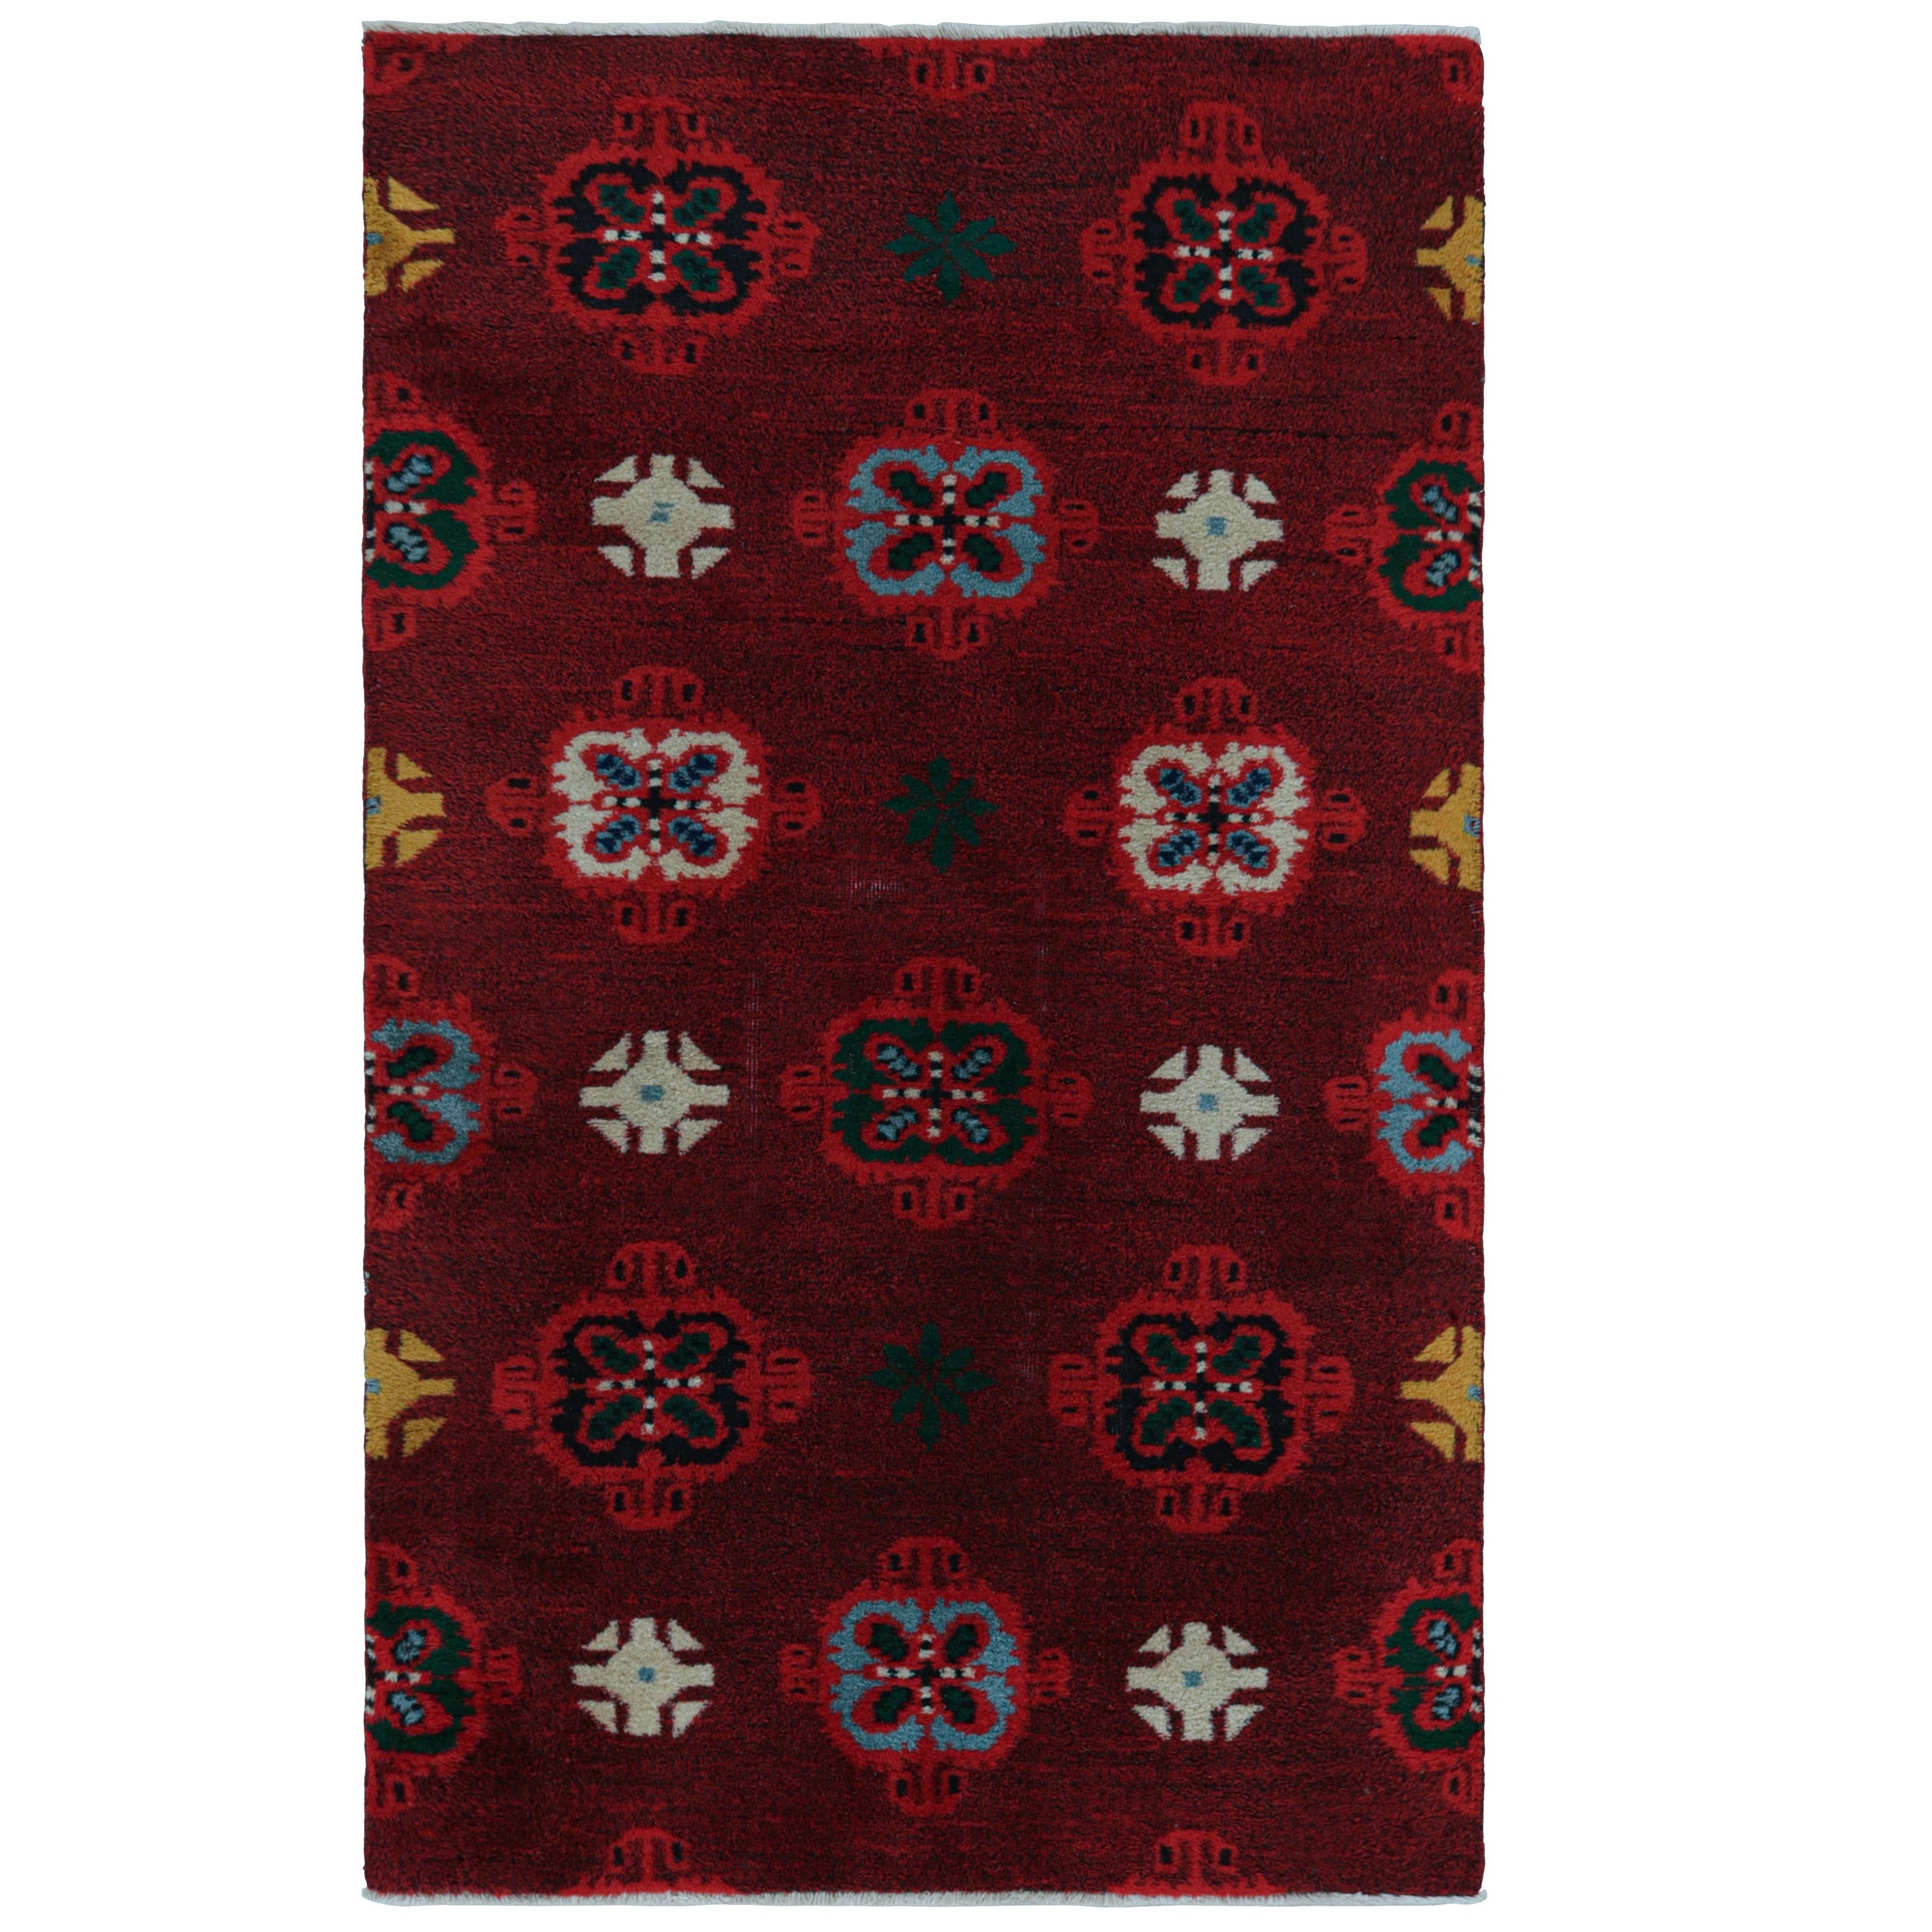 Vintage Zeki Müren Rug in Red with Geometric Patterns, from Rug & Kilim For Sale